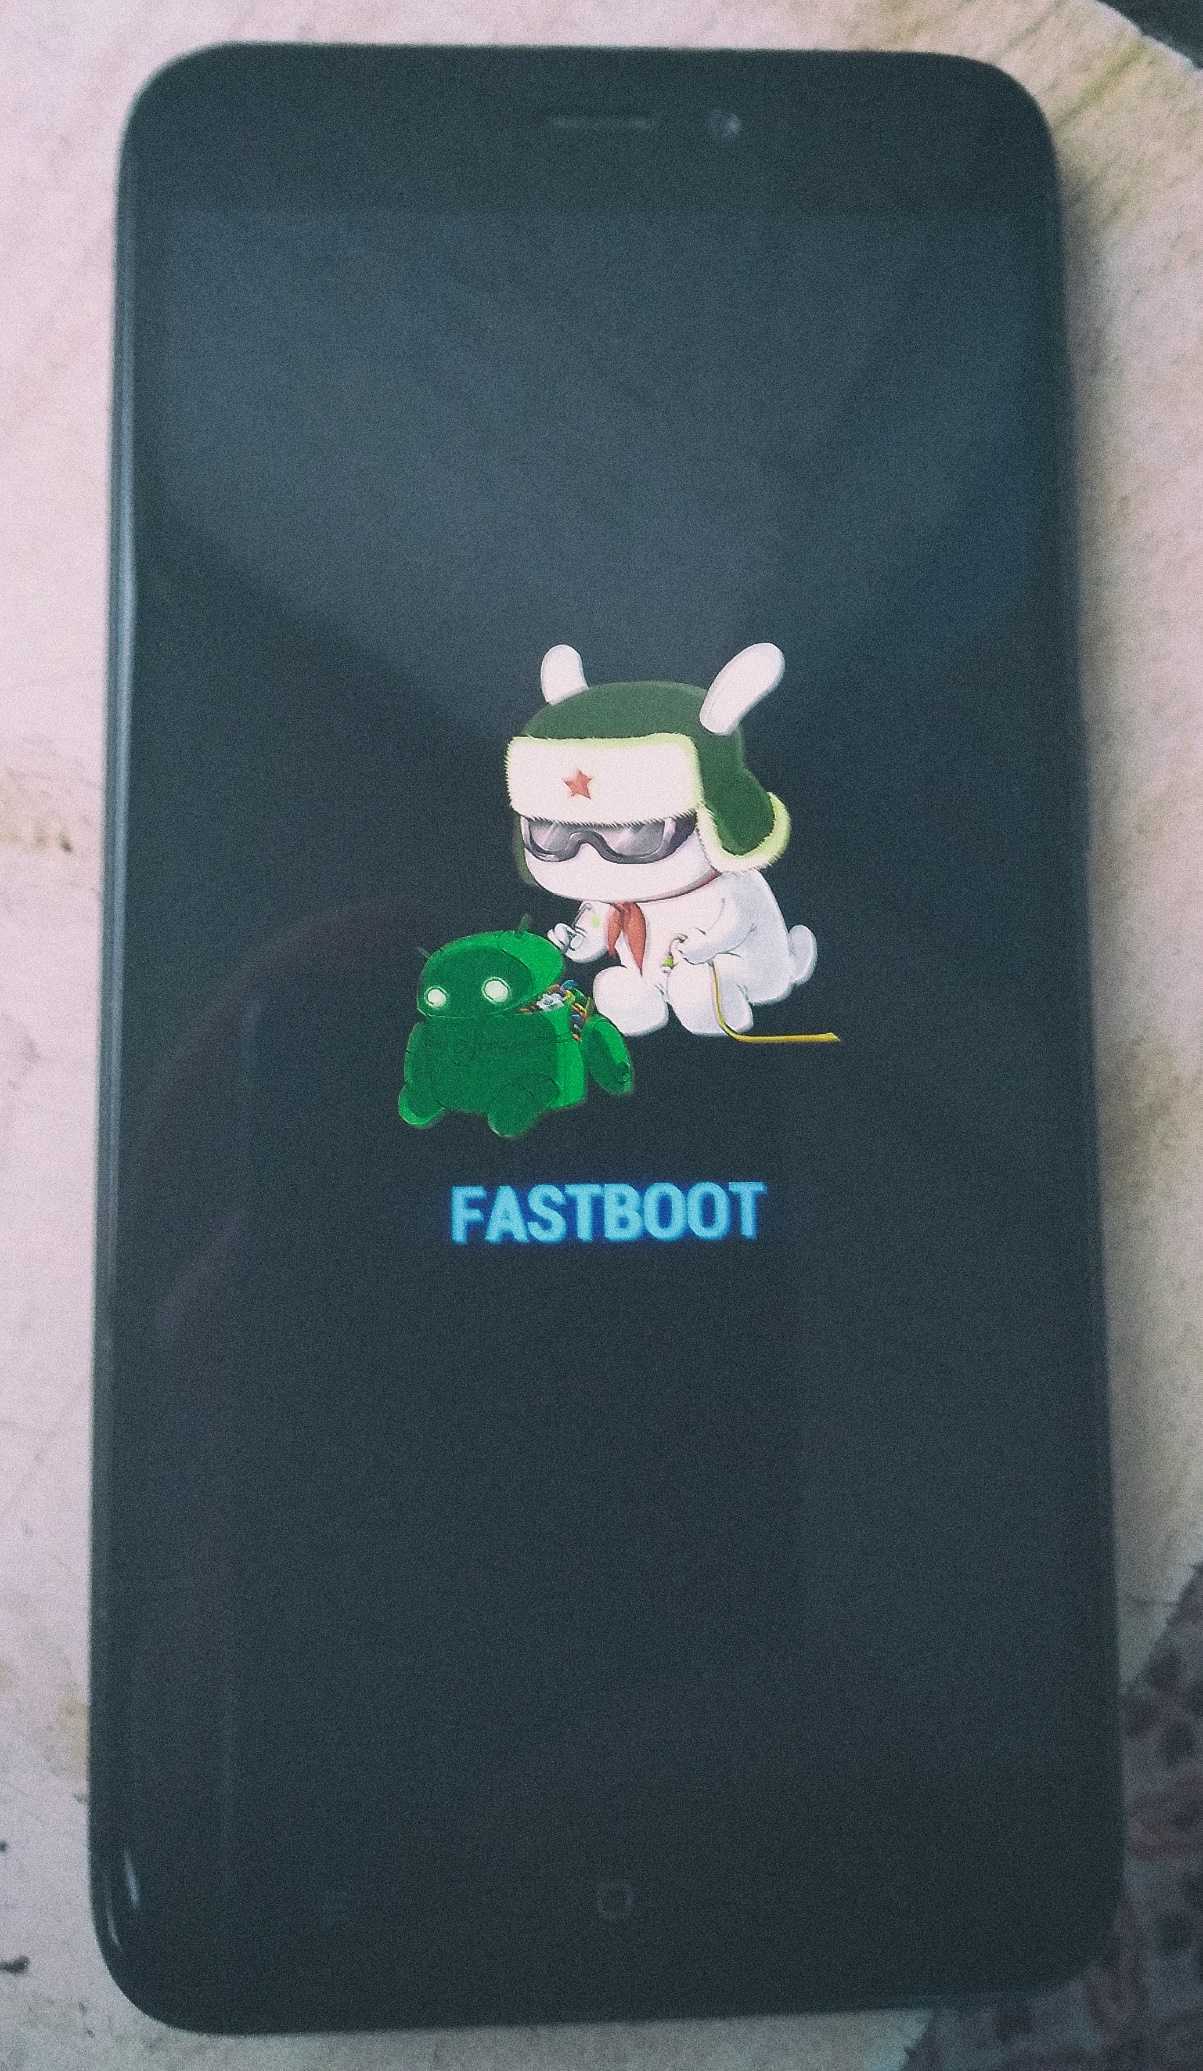 Fastboot redmi 8 pro. Режим Fastboot Mode. Андроид Fastboot. Фастбут Xiaomi. Fastboot Xiaomi что это такое.